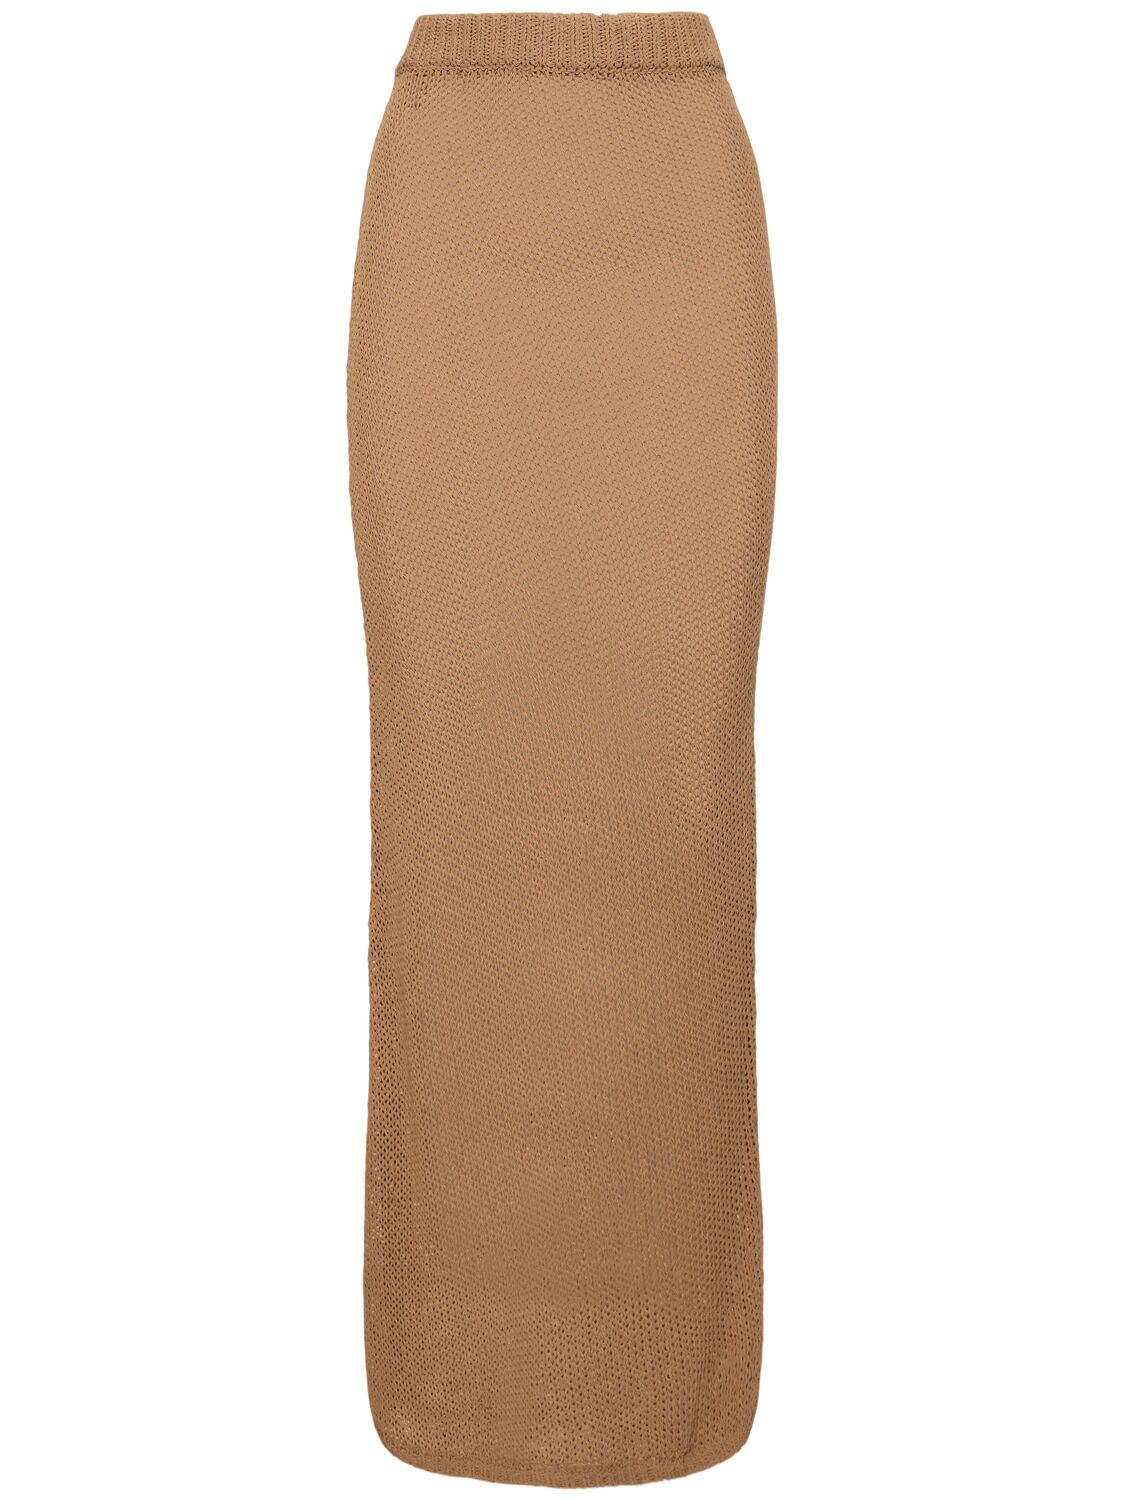 Image of Atele Cotton Blend Long Skirt